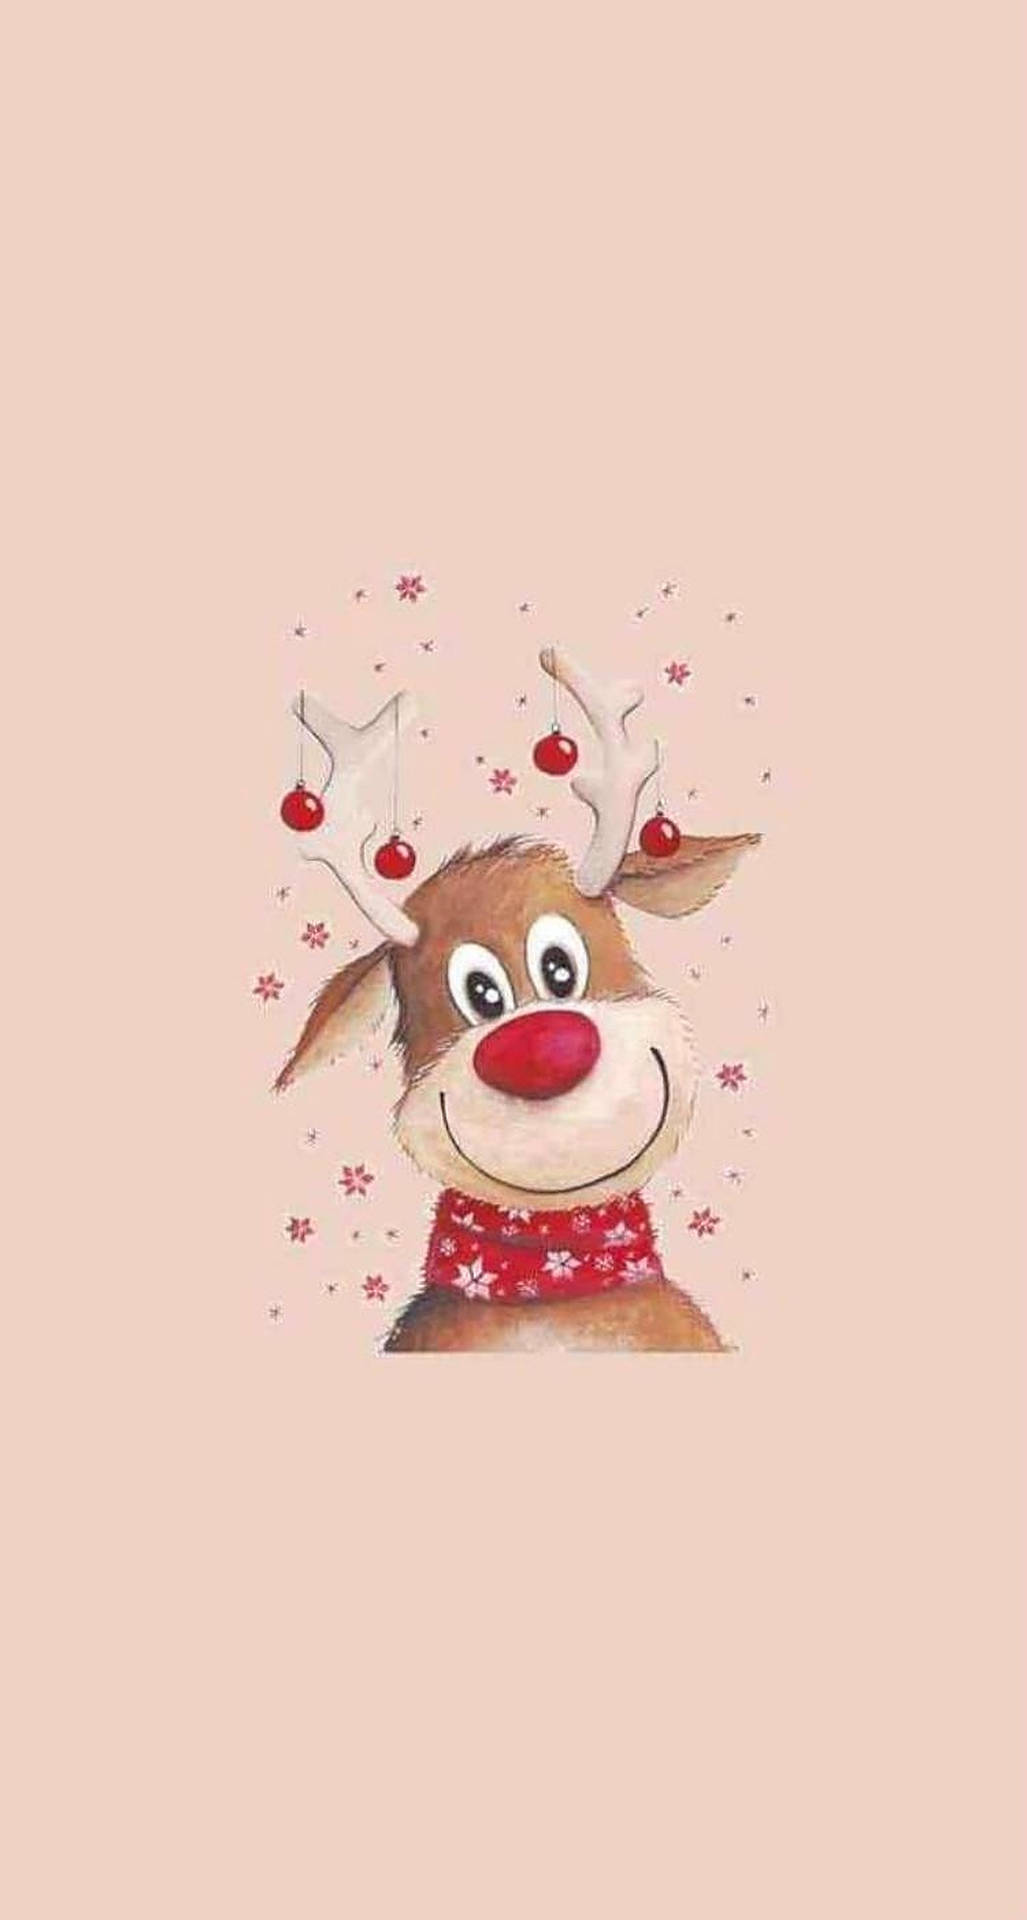 Cute Christmas Reindeer With Scarf